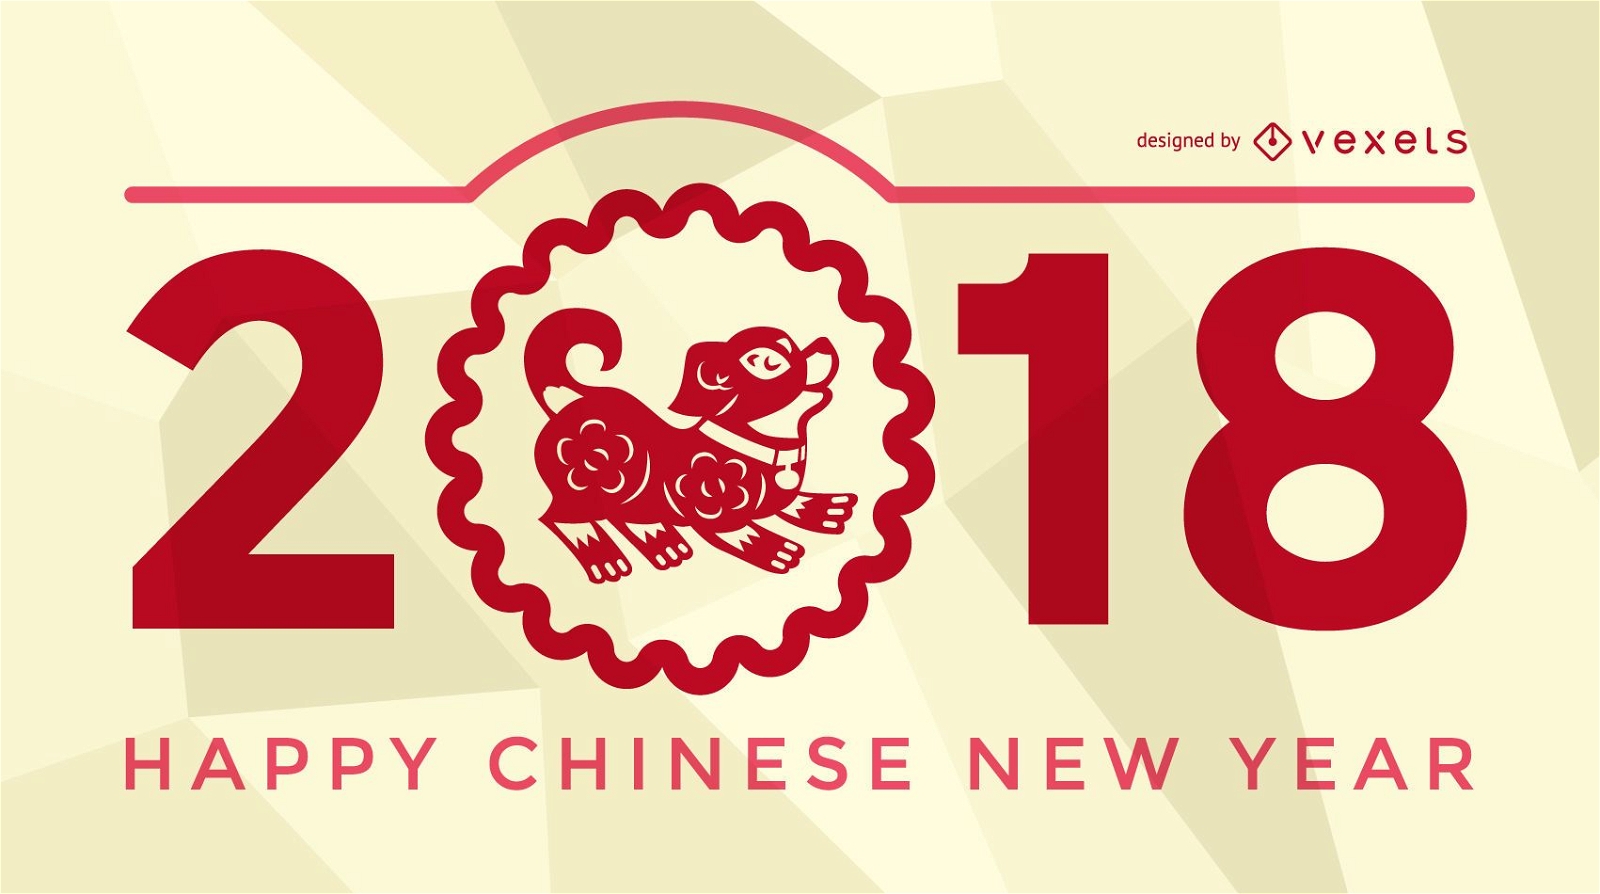 Festive 2018 Chinese New Year